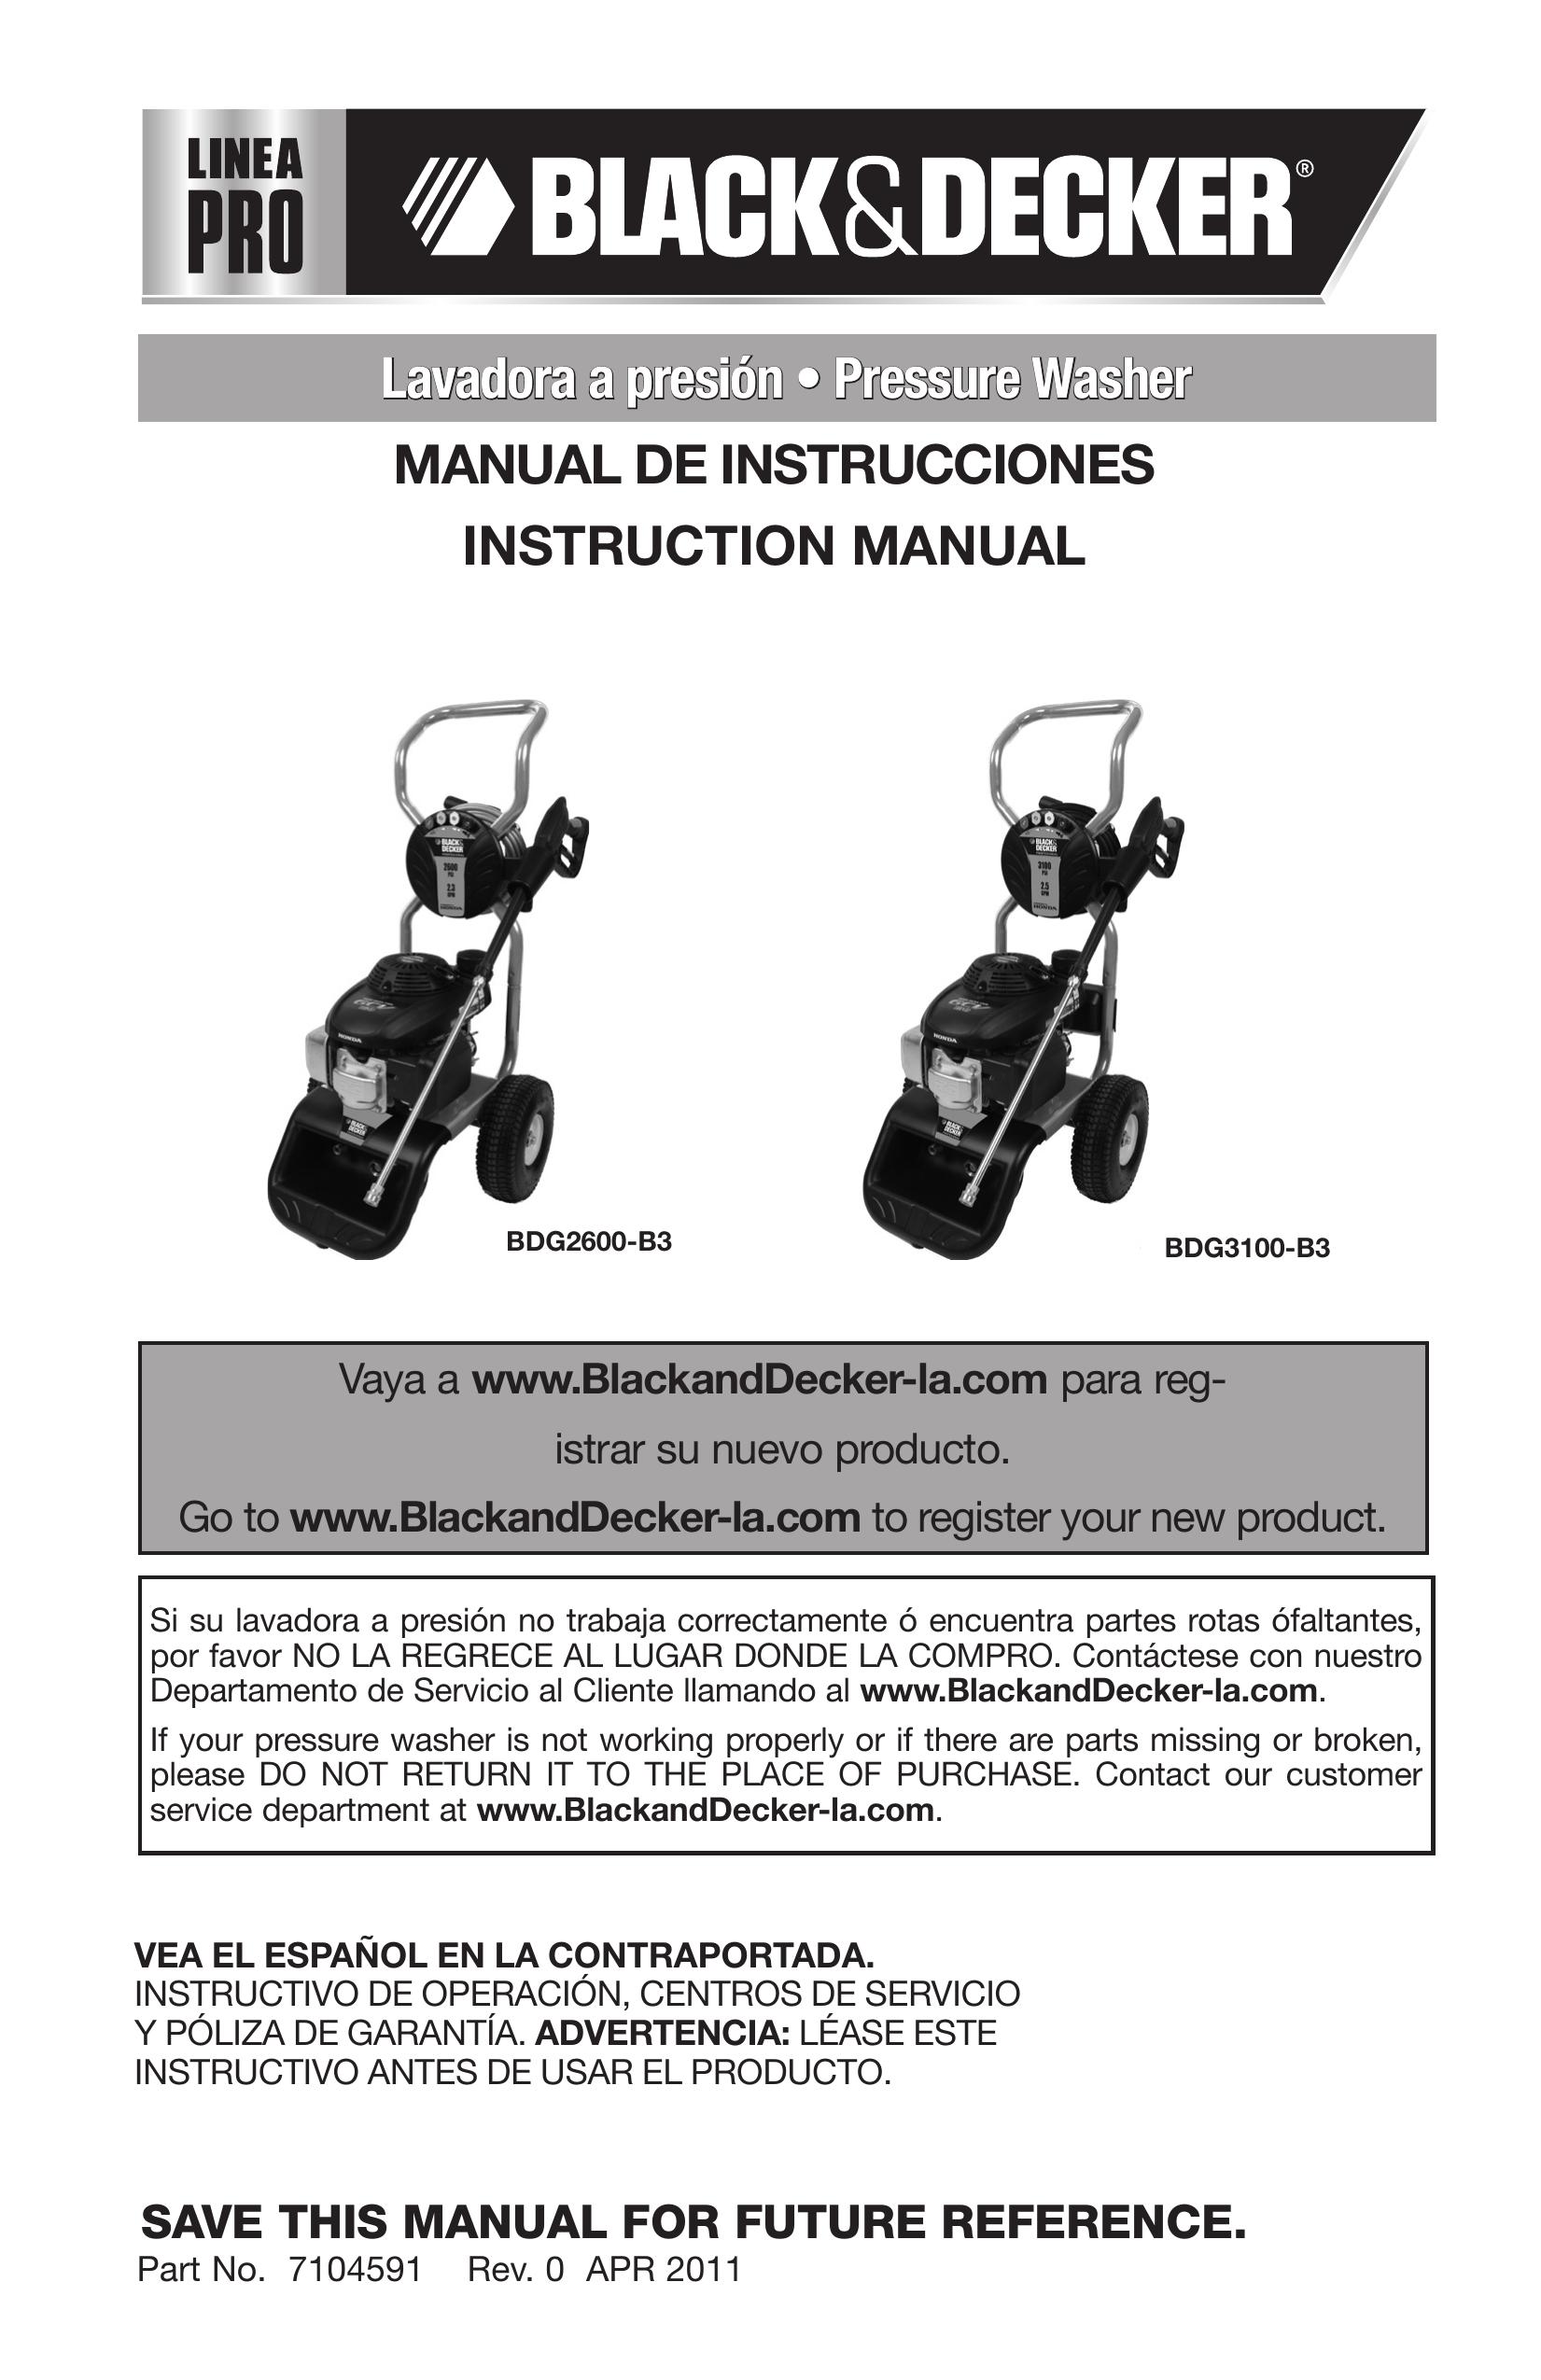 Black & Decker BDG3100-B3 Pressure Washer User Manual